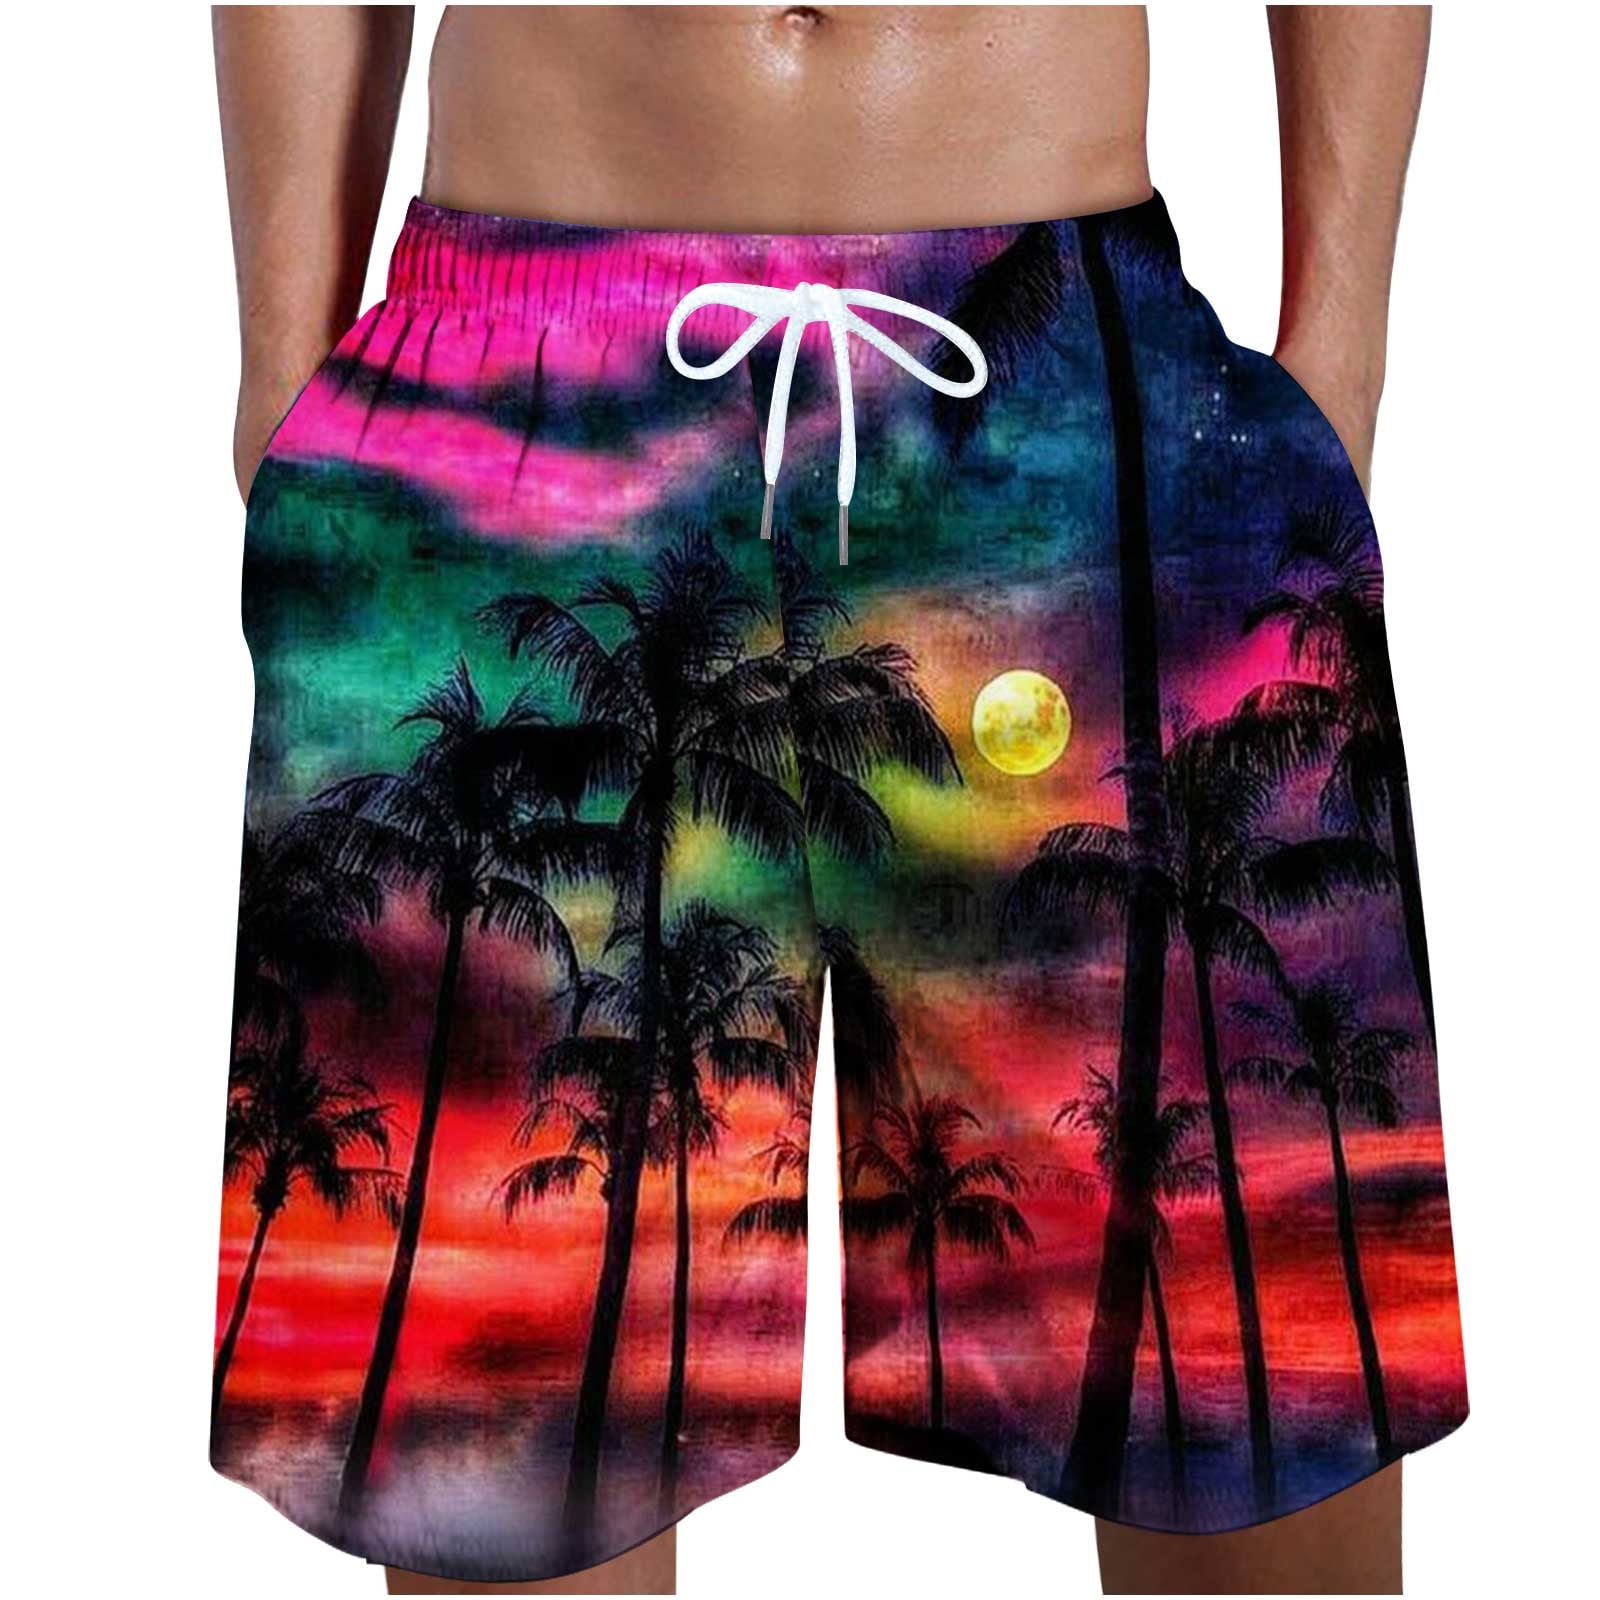 Njoeus Shorts Mens Swim Trunks Swimsuit Tropical Printed Beach Shorts ...